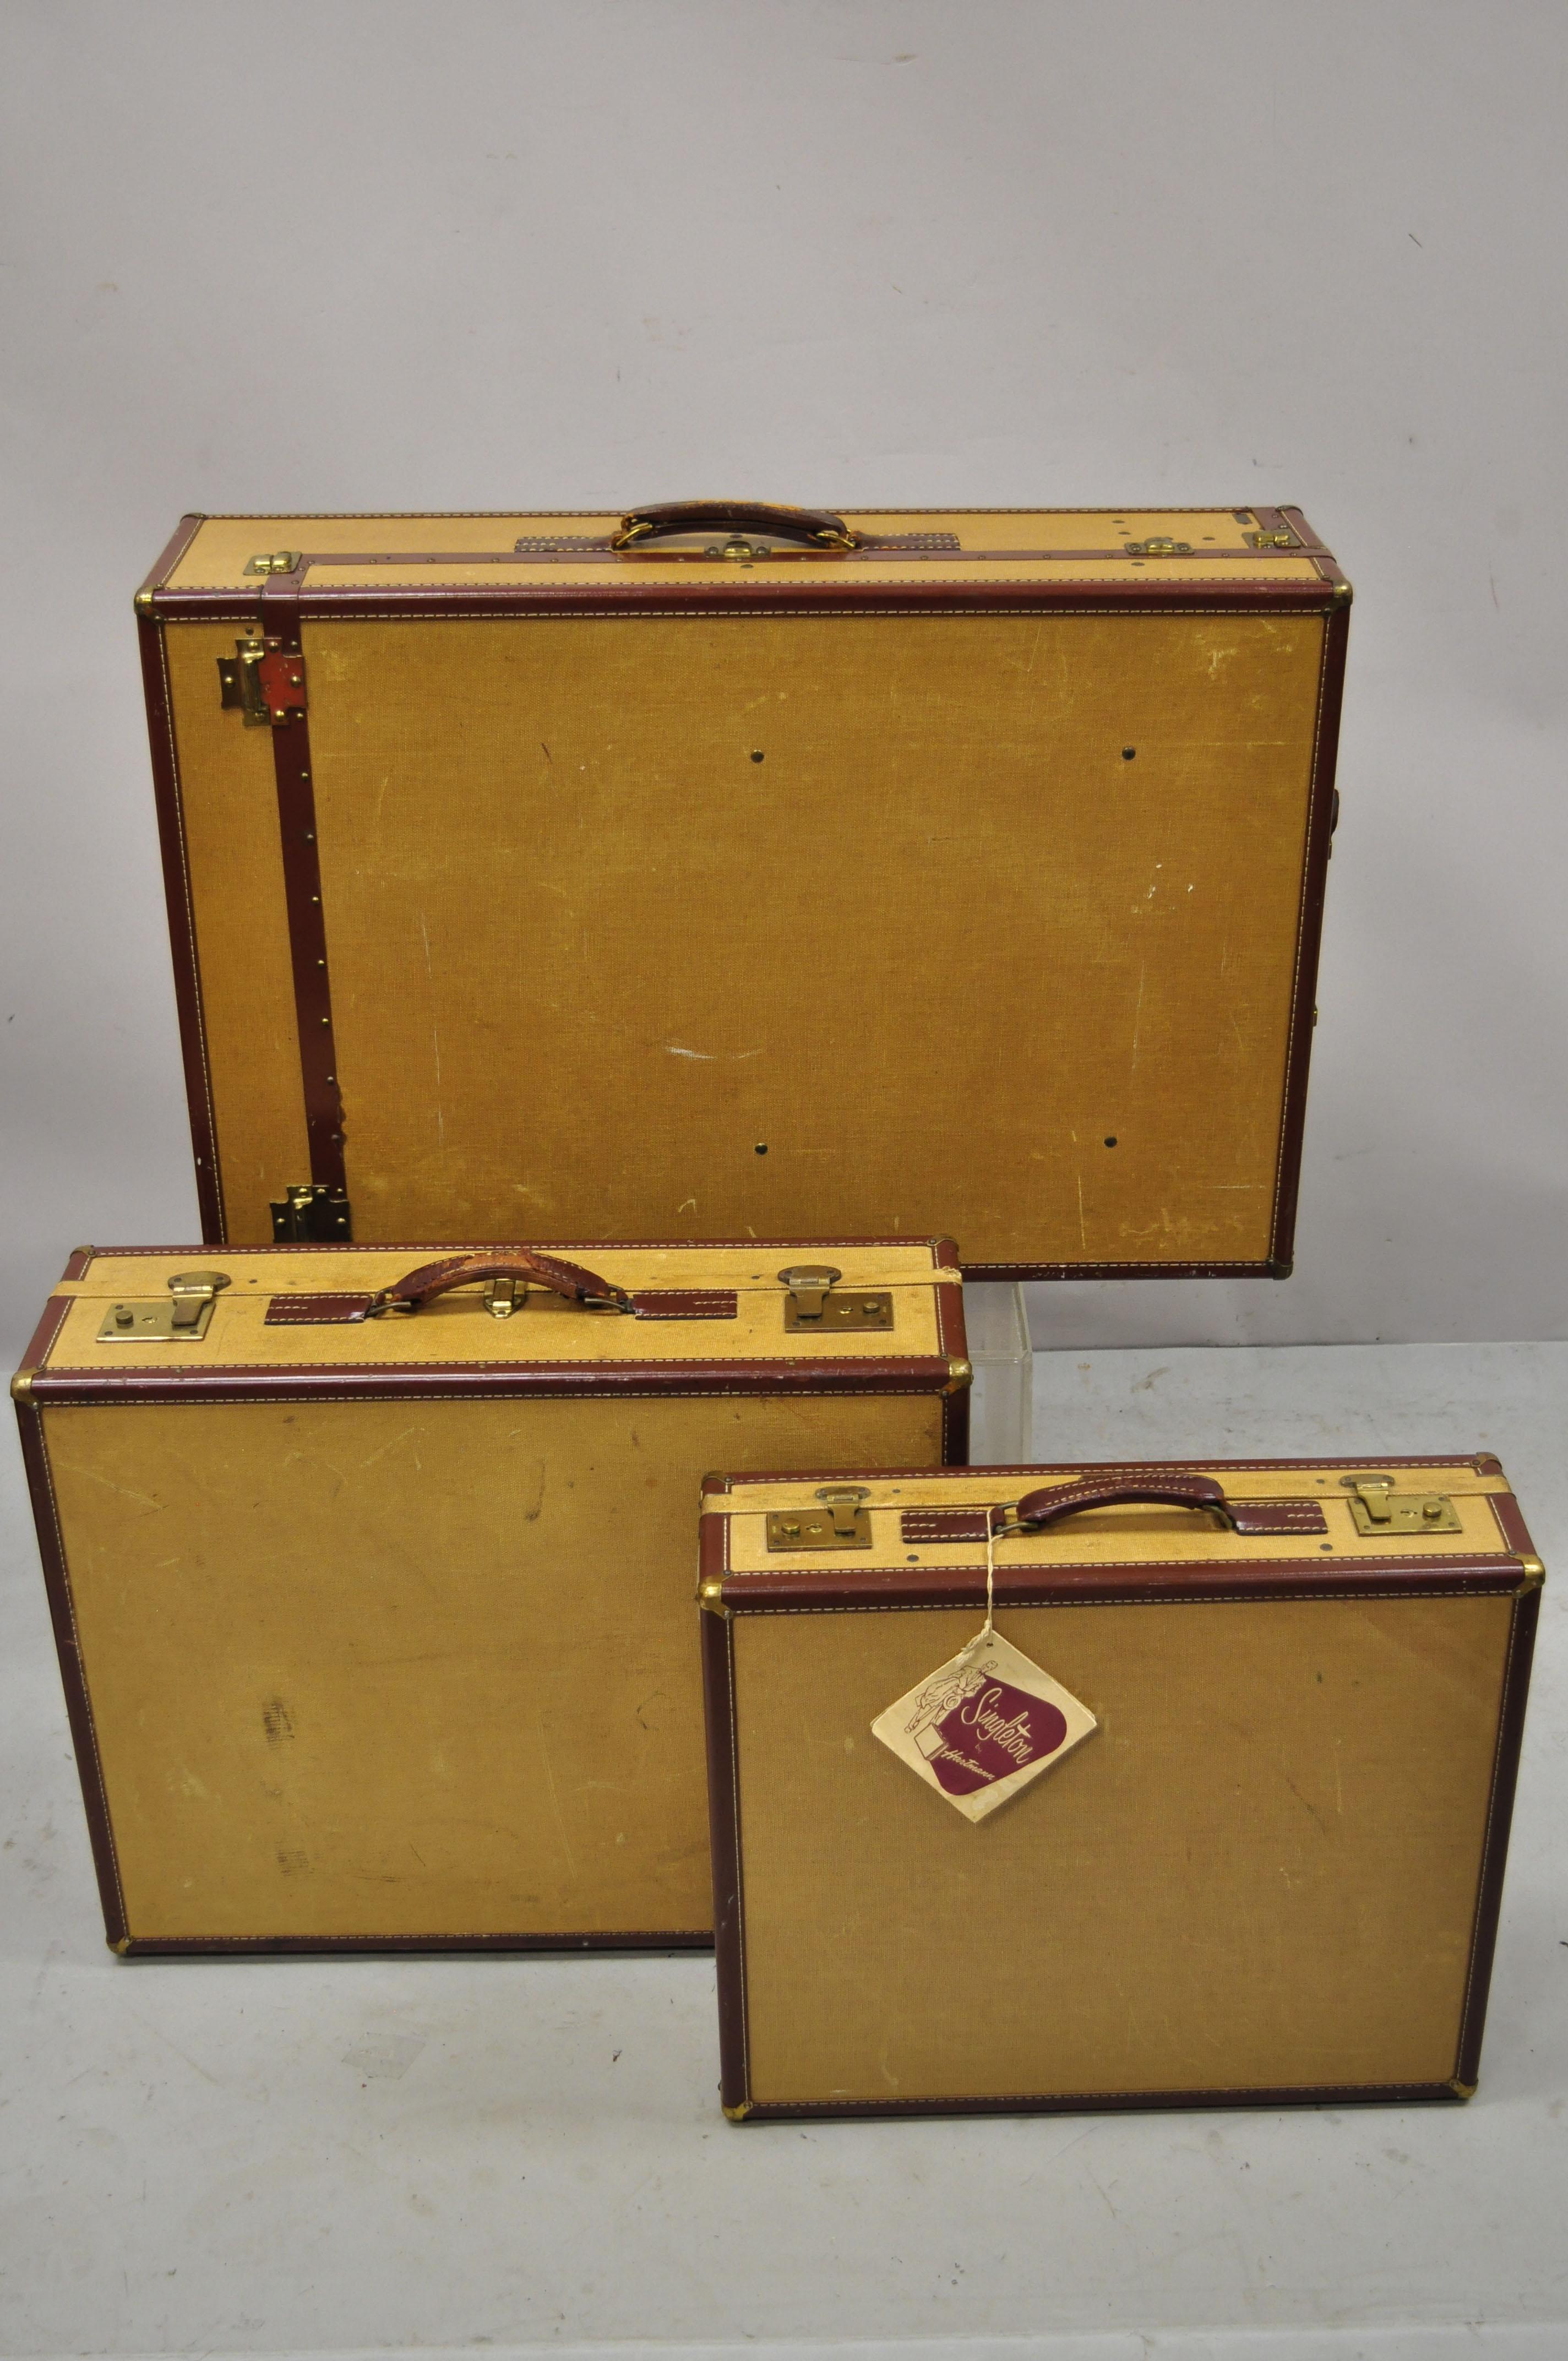 Hartmann Luggage Vintage - For Sale on 1stDibs